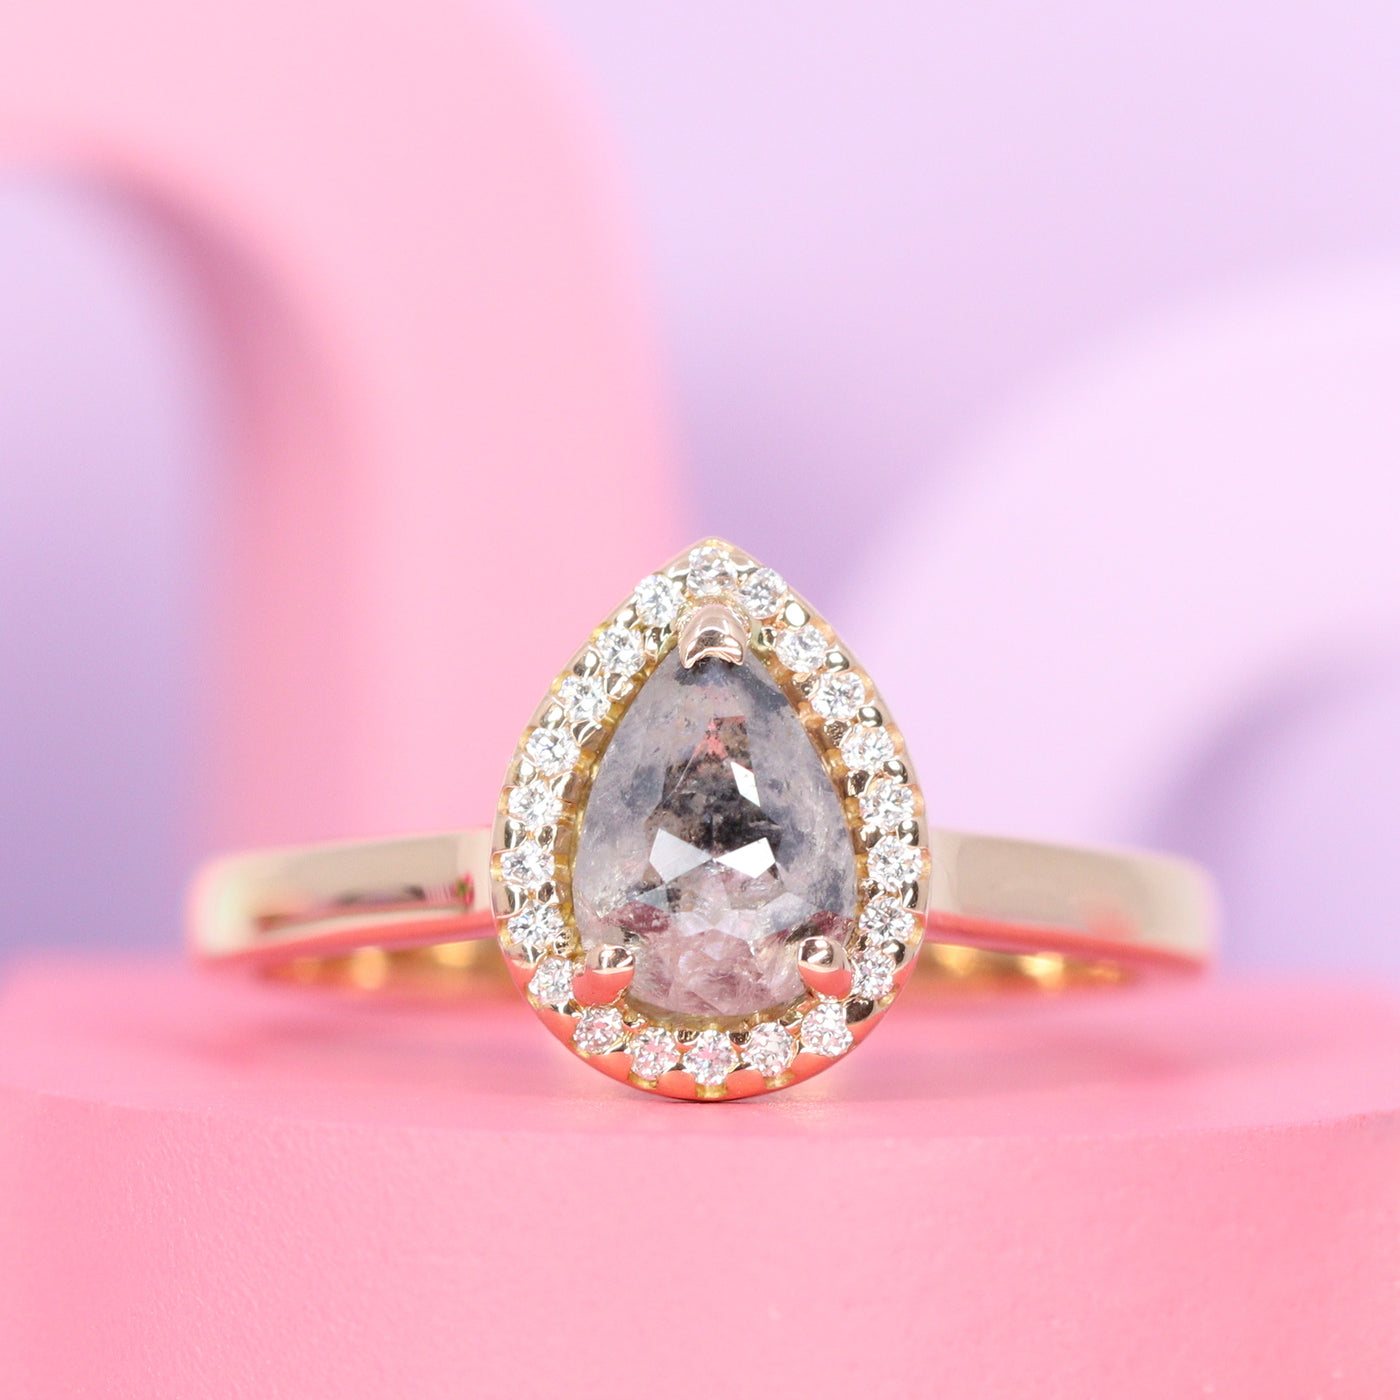 Winter & Jade - Bridal Set - Salt and Pepper Diamond Halo Engagement Ring and Diamond Set Tiara Wedding Ring - Made-to-Order